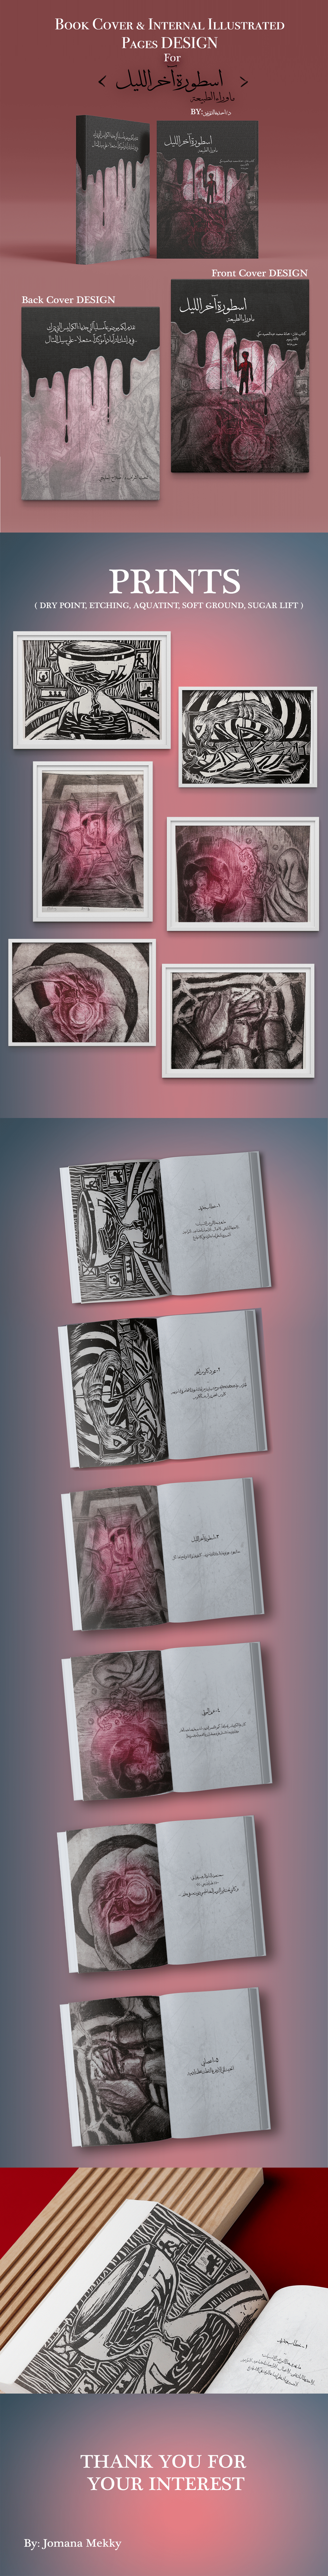 Paranormal book cover book design print Prints Design etching engraving linocut printmaking intaglio